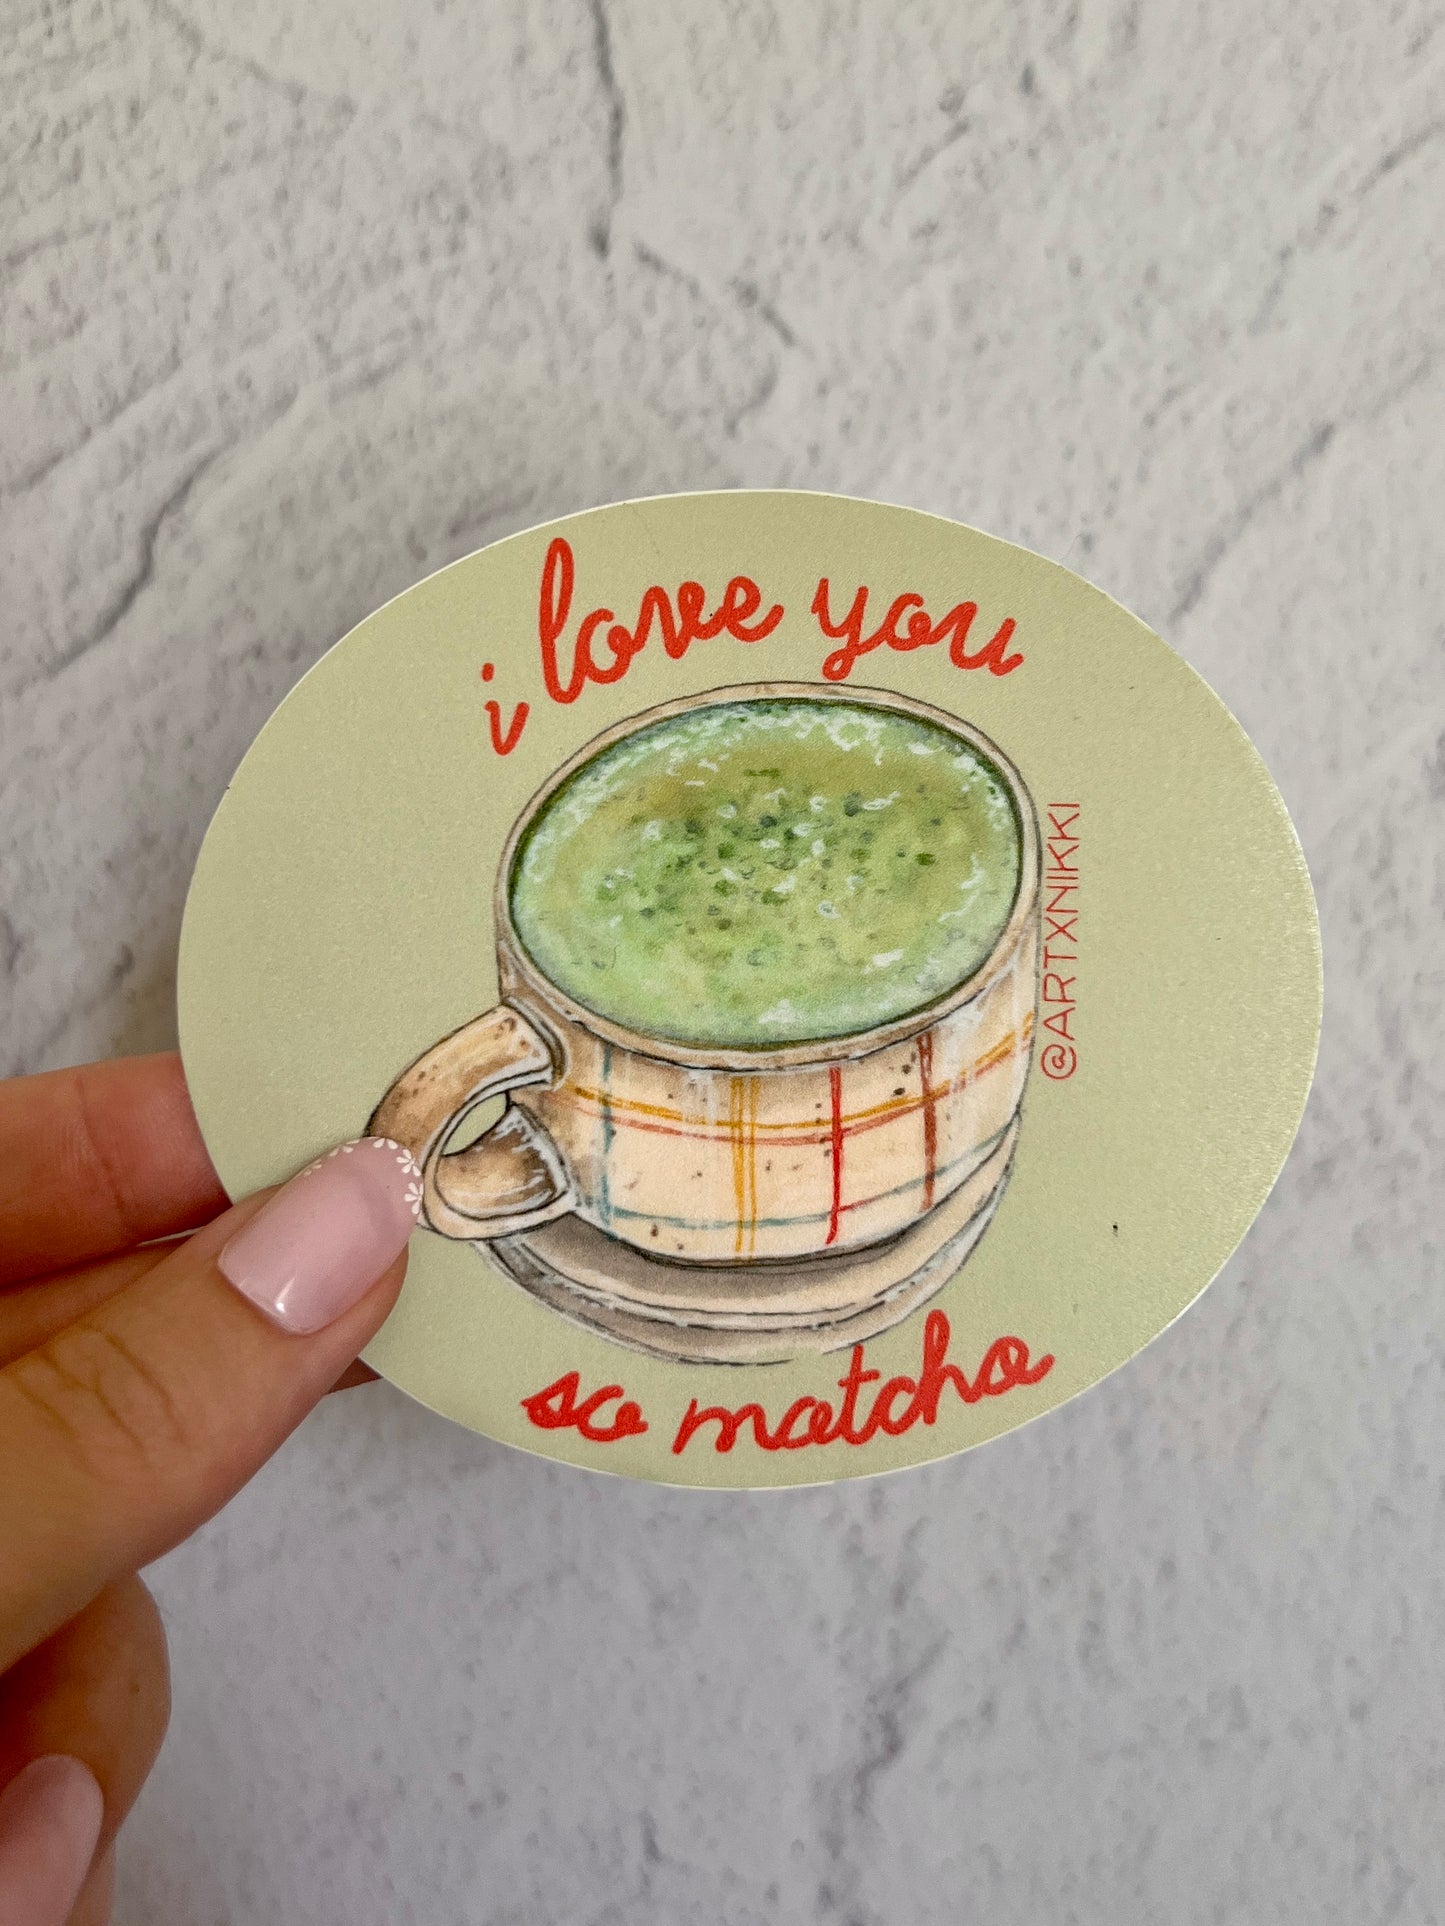 Matcha "I love you so matcha" Sticker